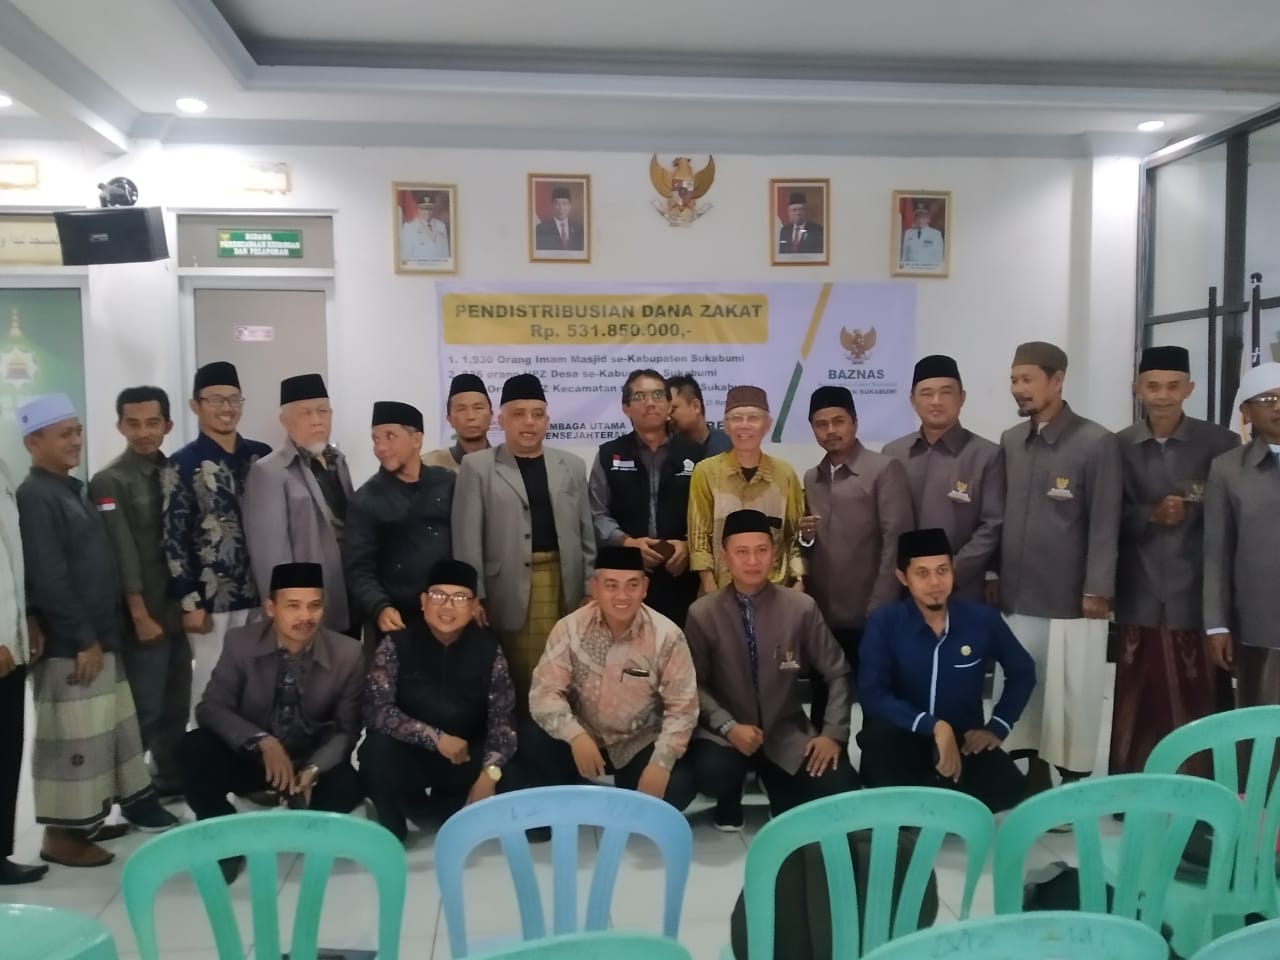 Baznas Kabupaten Sukabumi distribusikan dana zakat Rp. 531.850.000,-